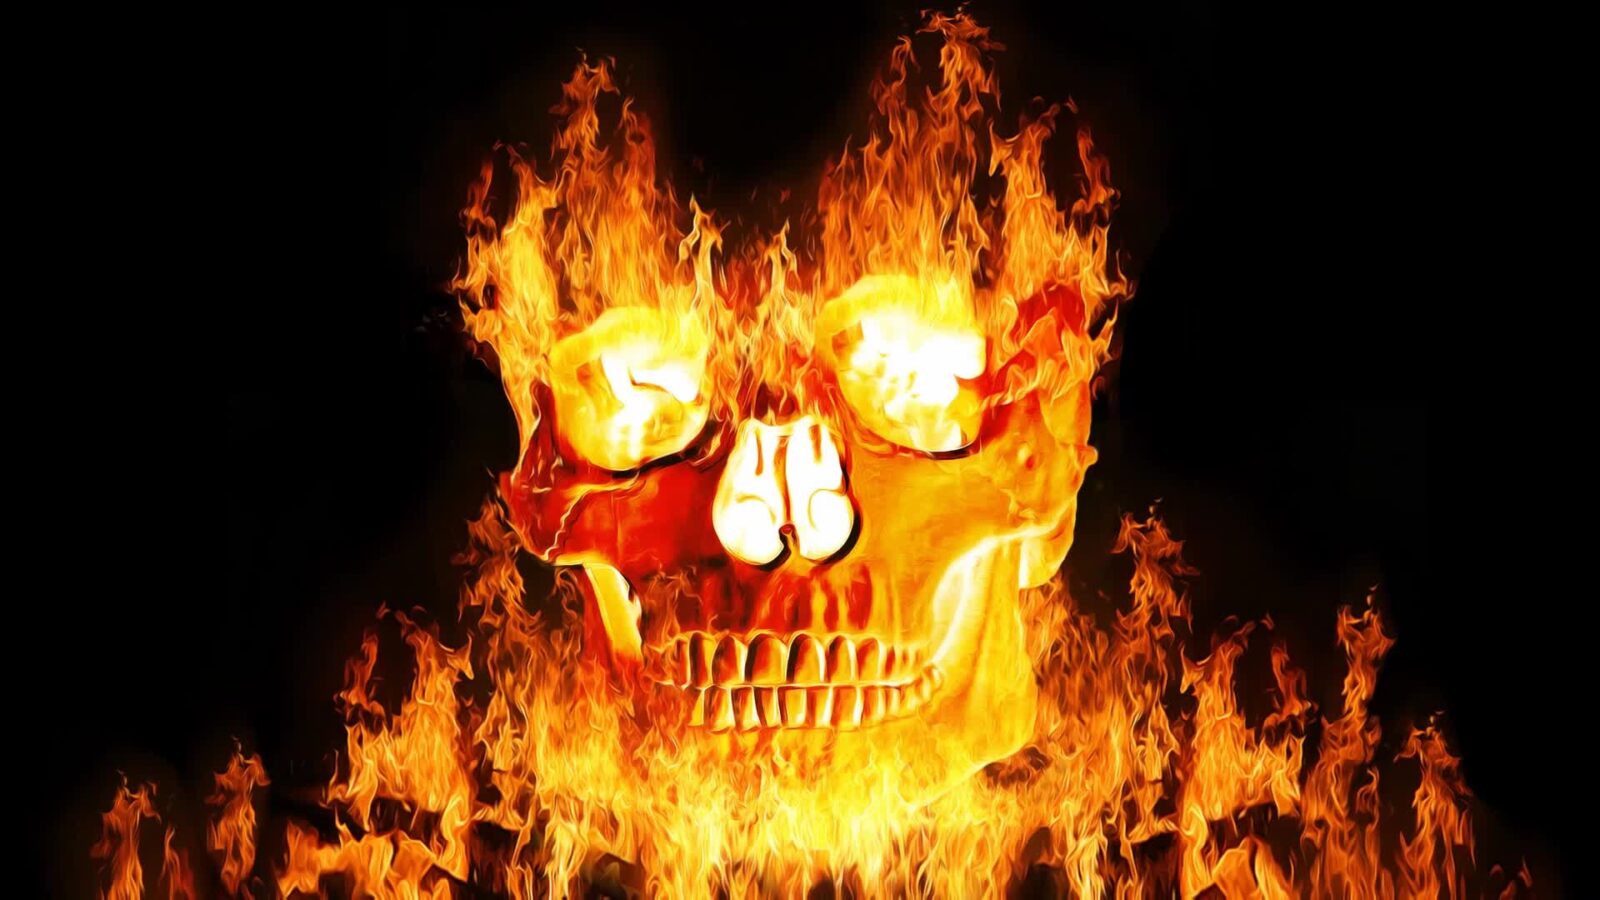 Skull Fire Flame Horror - Animated Live Wallpaper - Live Desktop Wallpapers